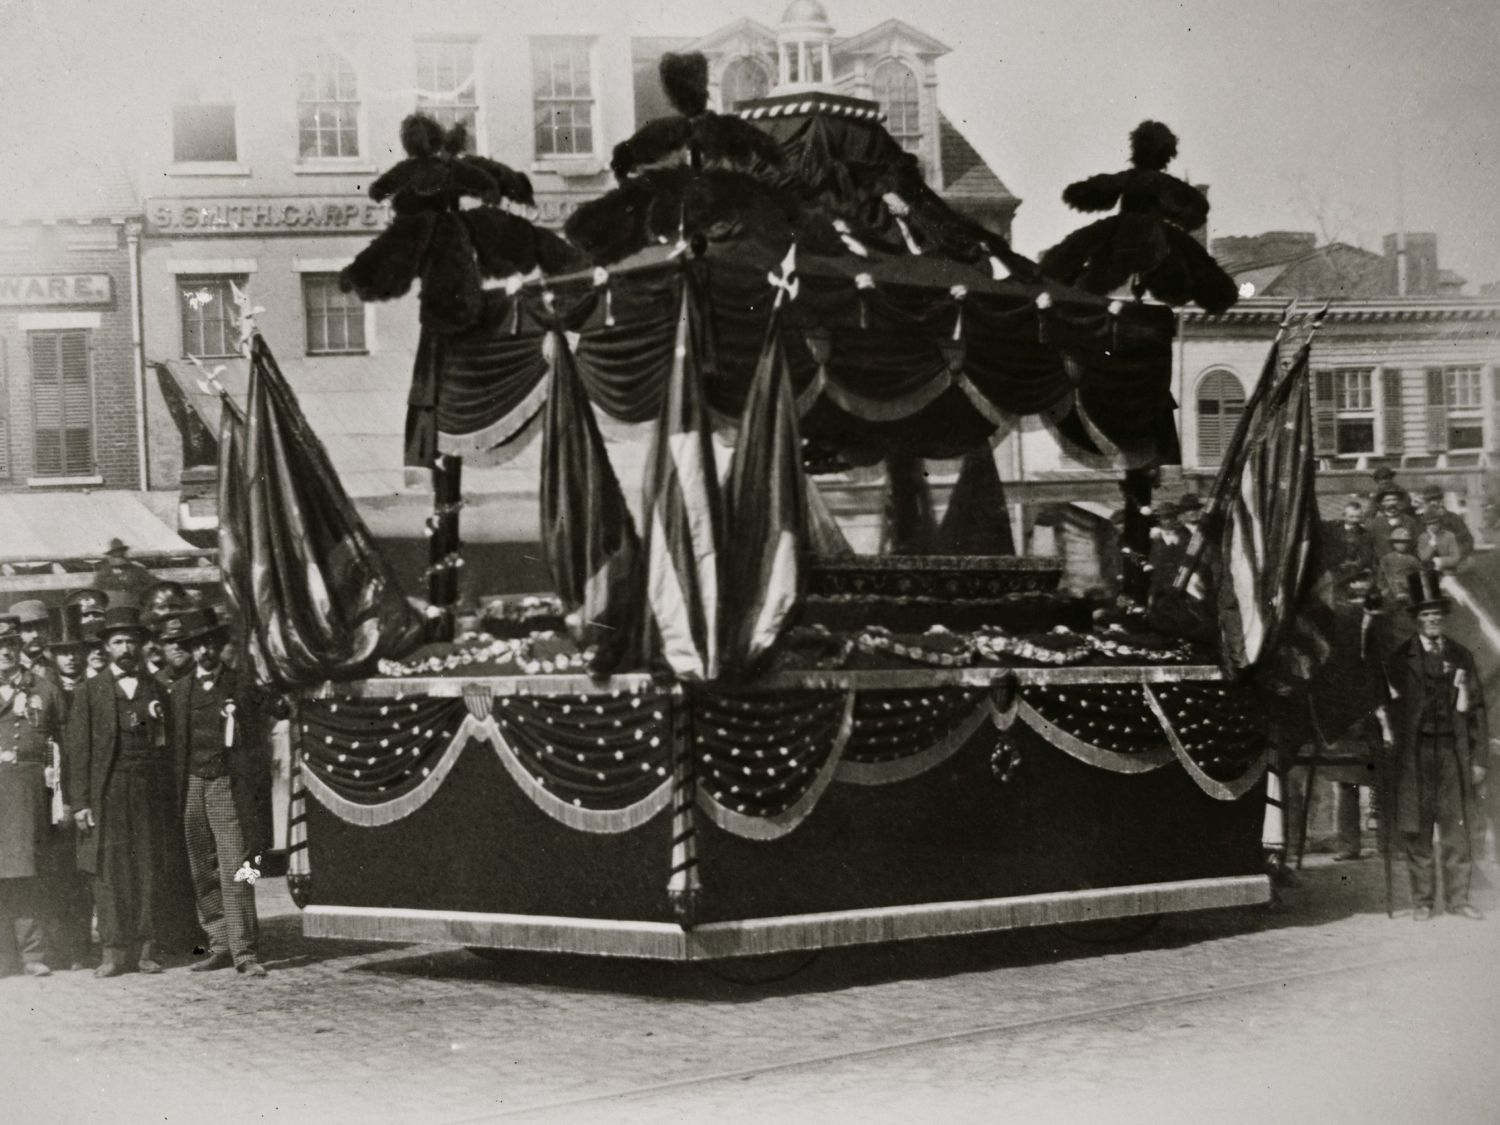 5 Fascinating Civil War Photos